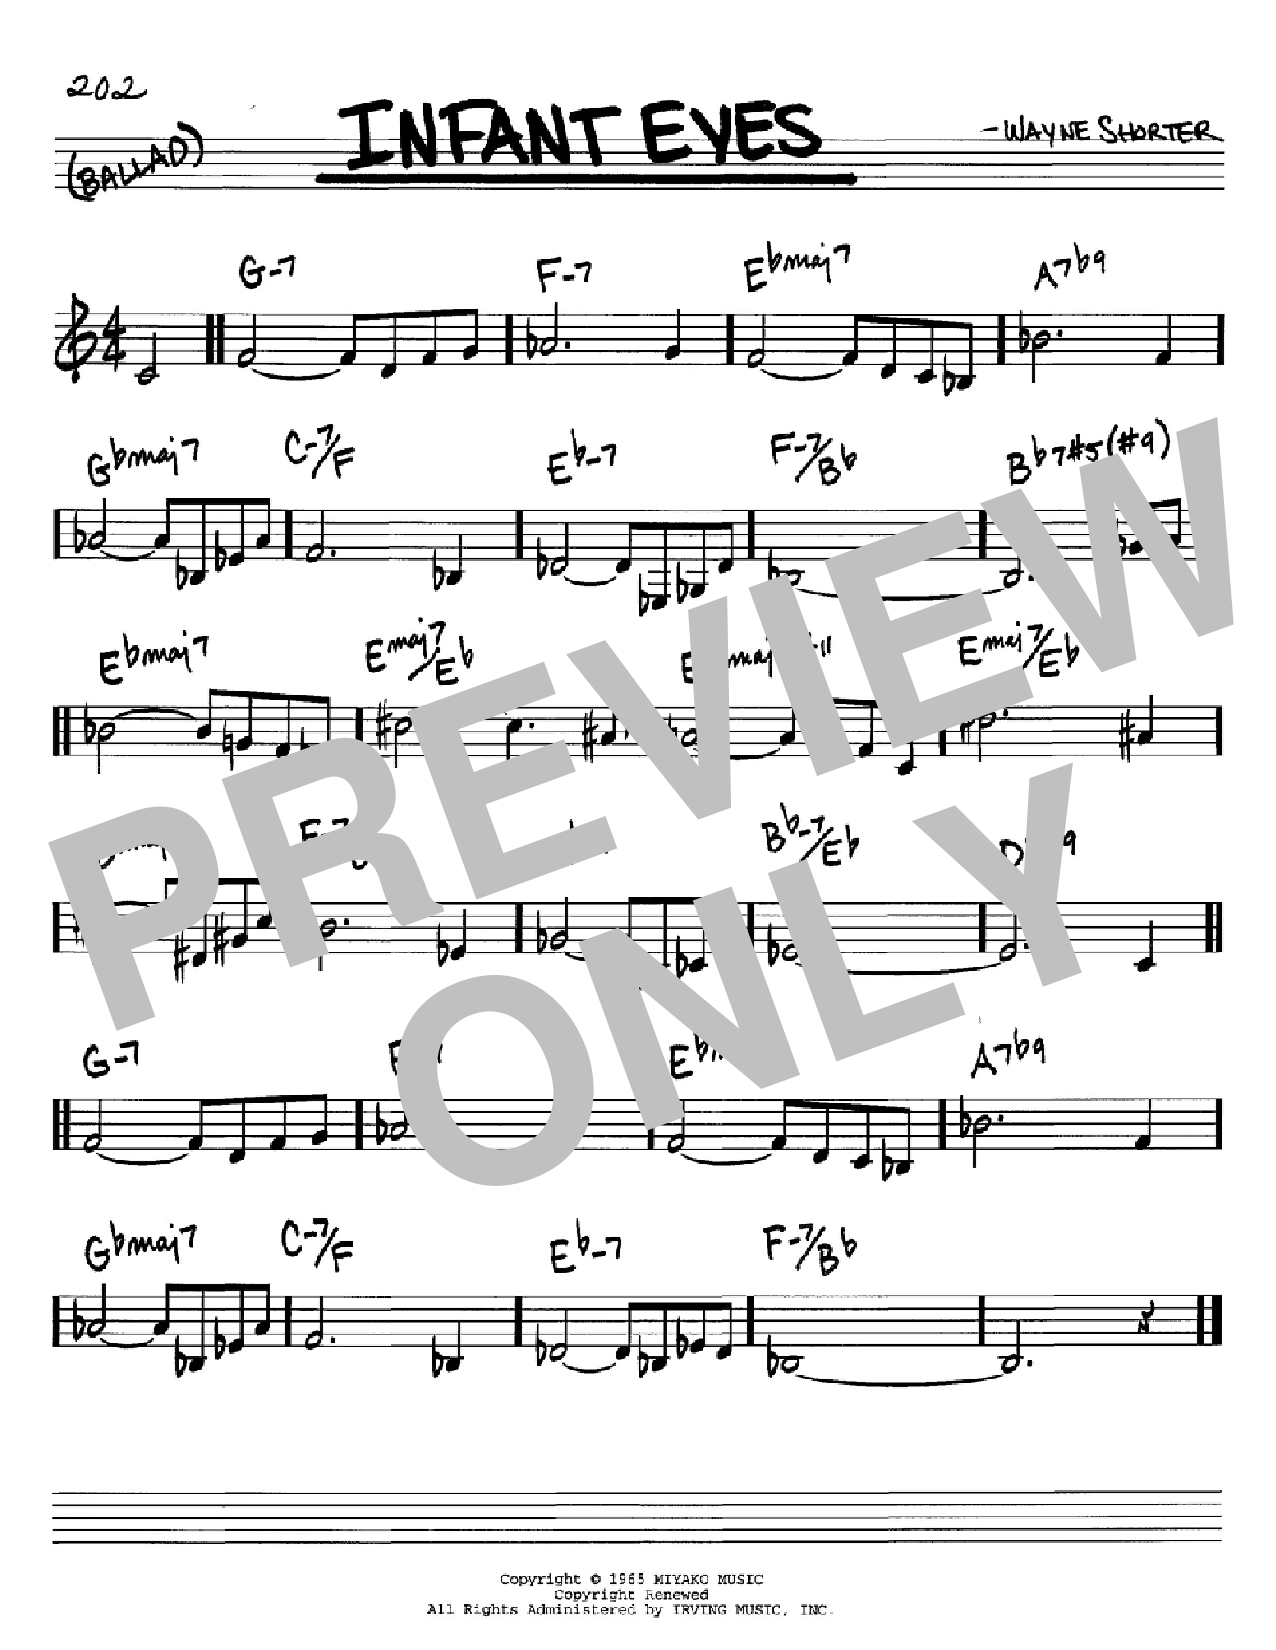 Wayne Shorter Infant Eyes Sheet Music Notes & Chords for Tenor Sax Transcription - Download or Print PDF